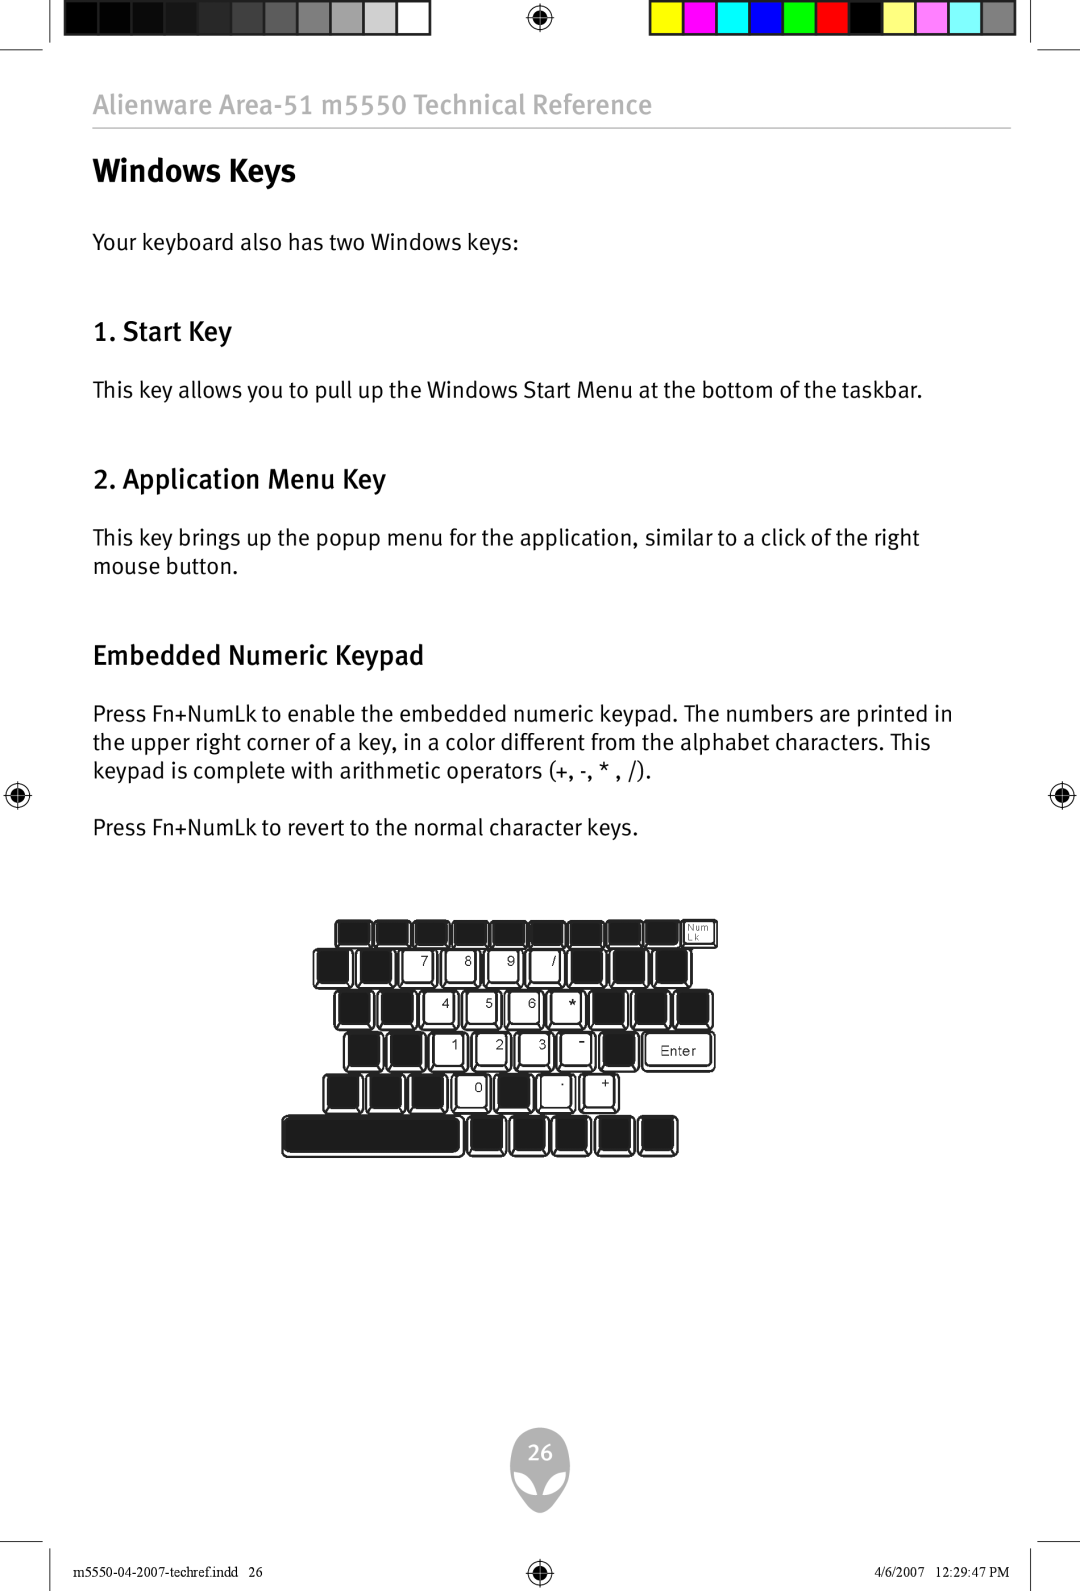 Alienware m5550 user manual Windows Keys, Start Key, Application Menu Key, Embedded Numeric Keypad 